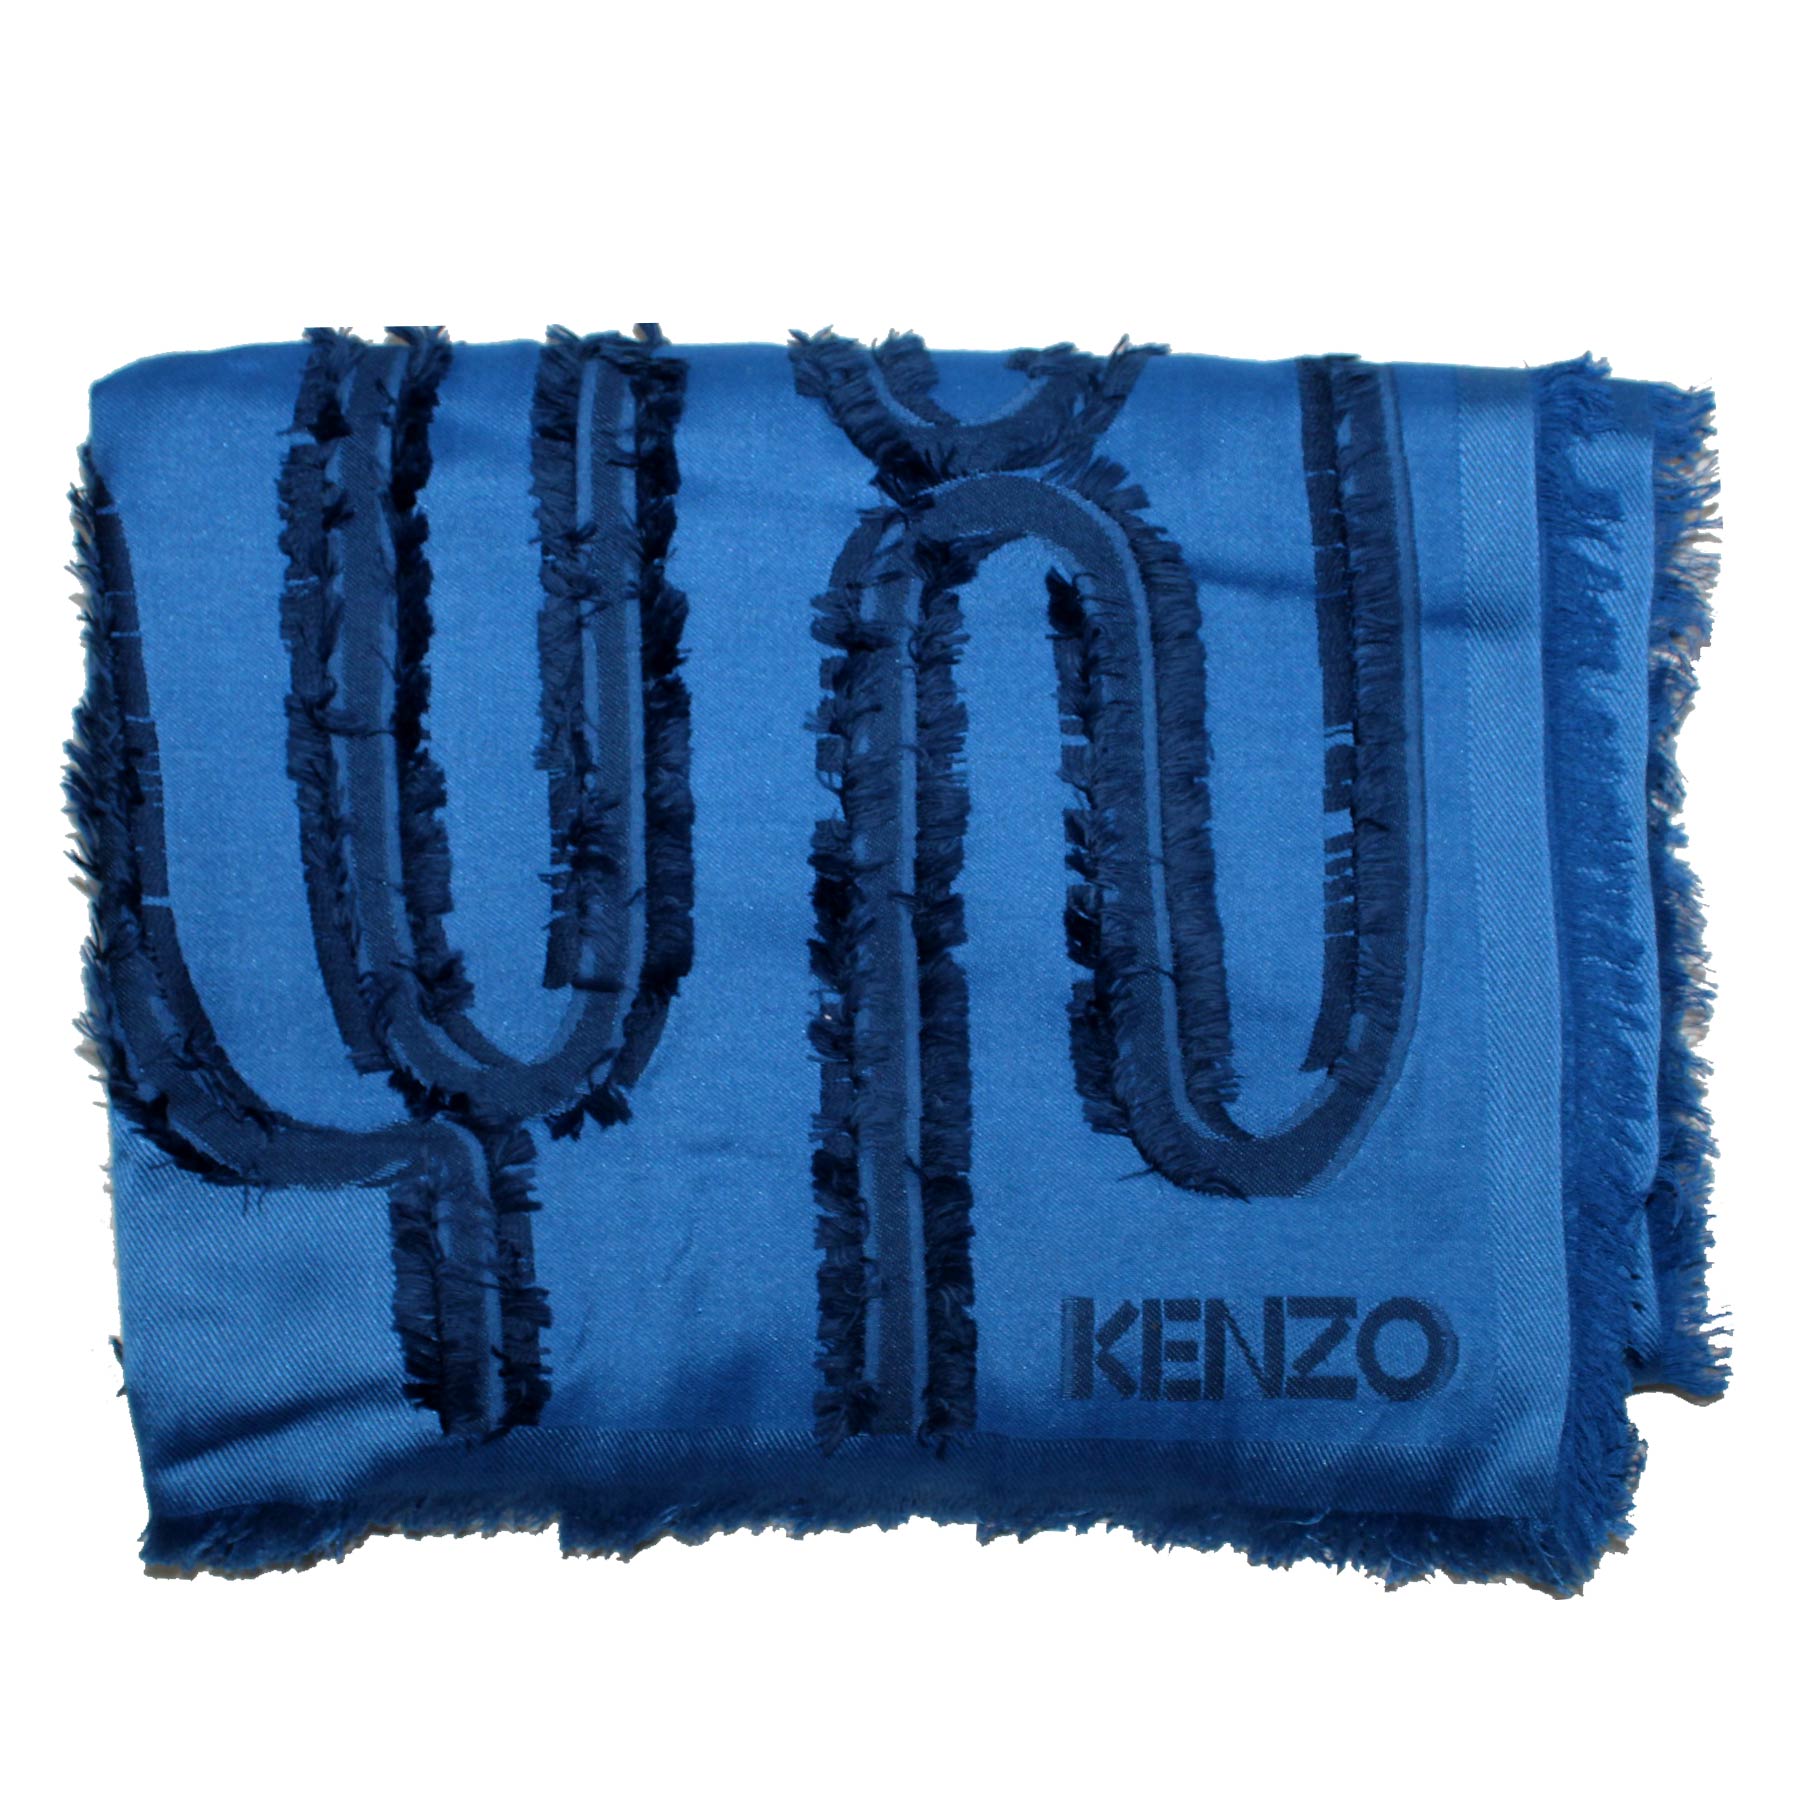 Kenzo Scarf Royal Blue Design - Large Cotton Silk Shawl - SALE